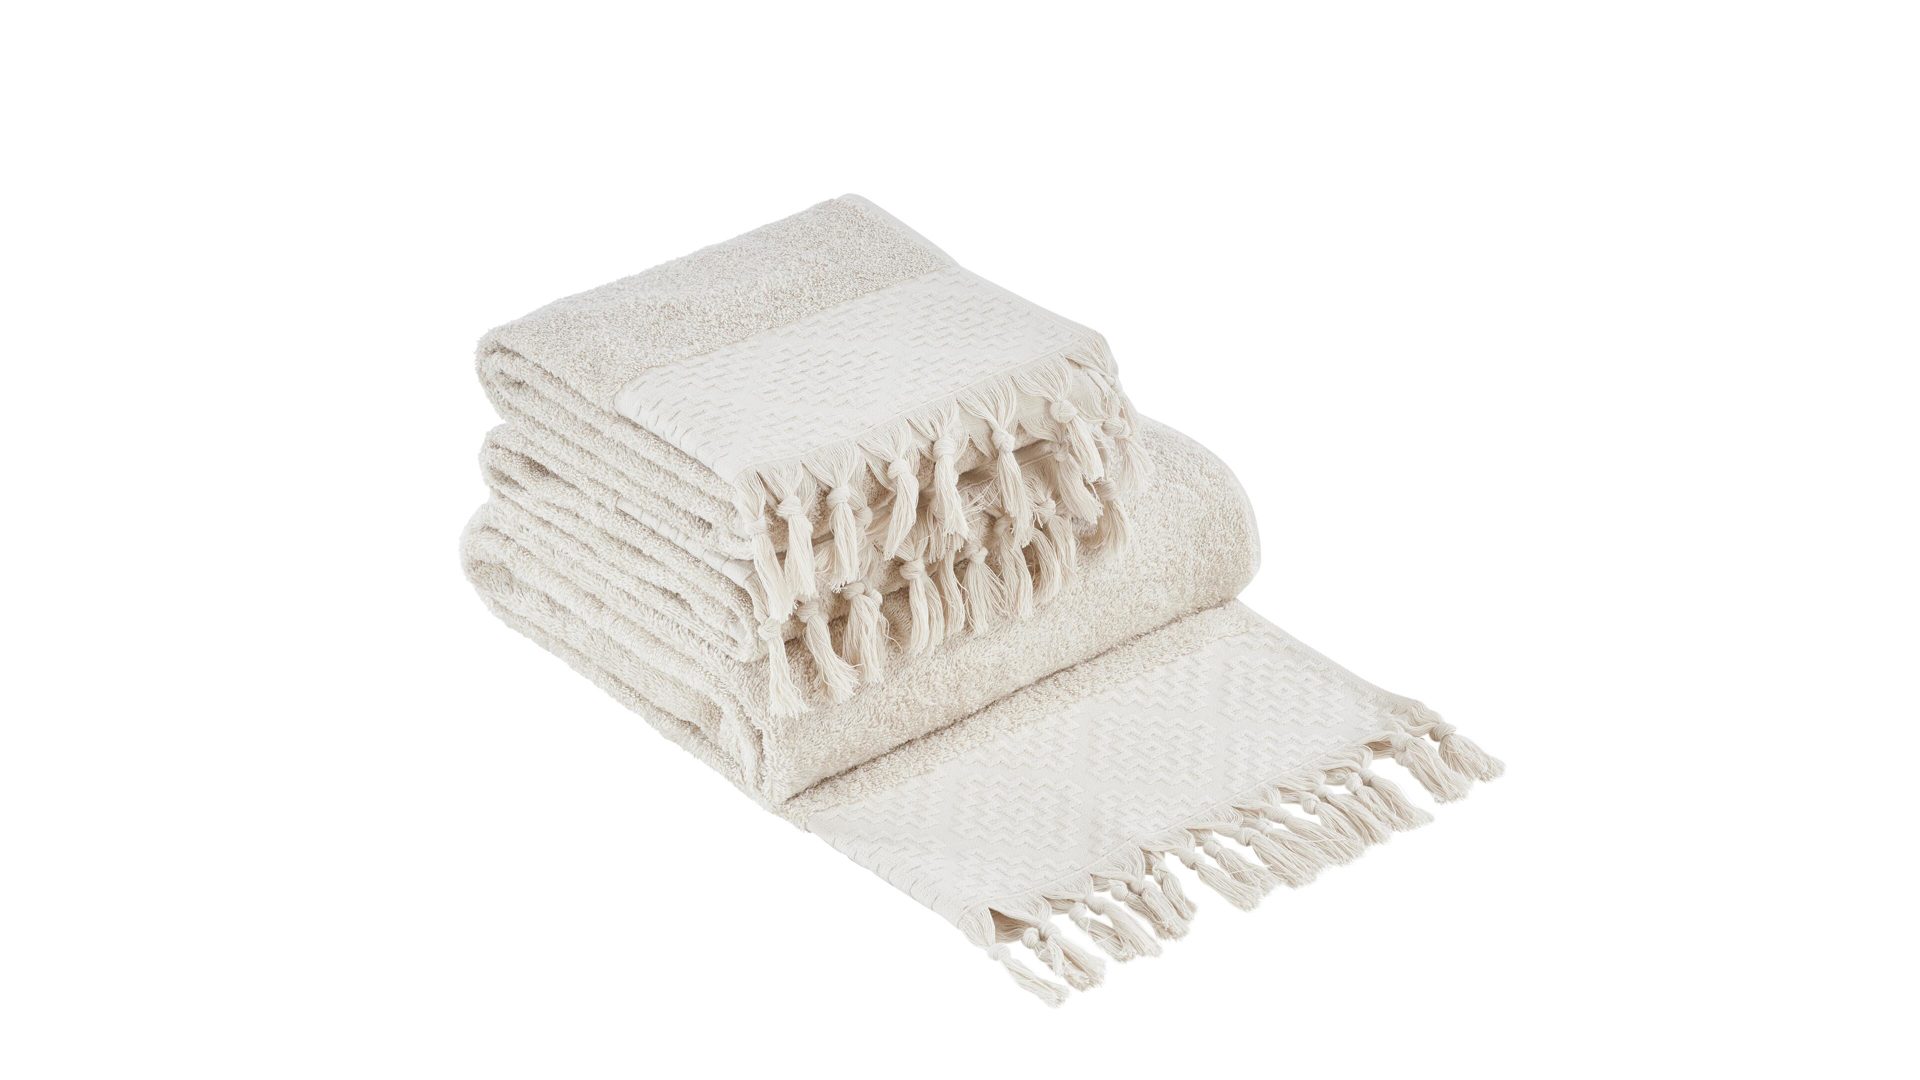 Handtuch-Set Done by karabel home company aus Stoff in Beige done Handtuch-Set Provence Boheme beige Baumwolle  – dreiteilig